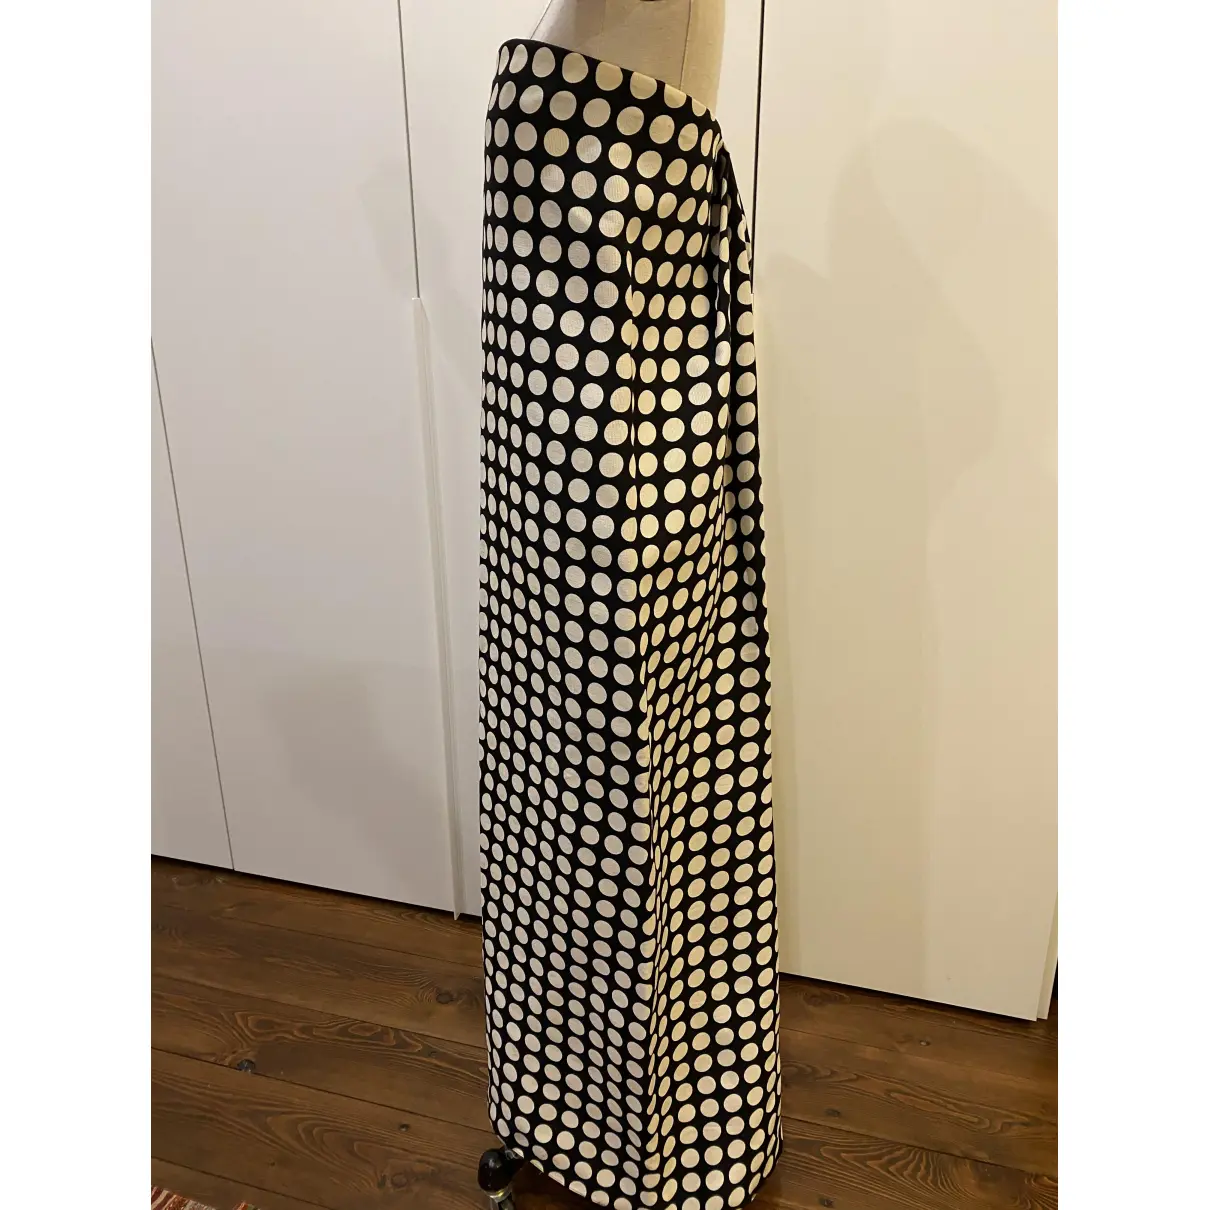 Silk maxi dress Yves Saint Laurent - Vintage